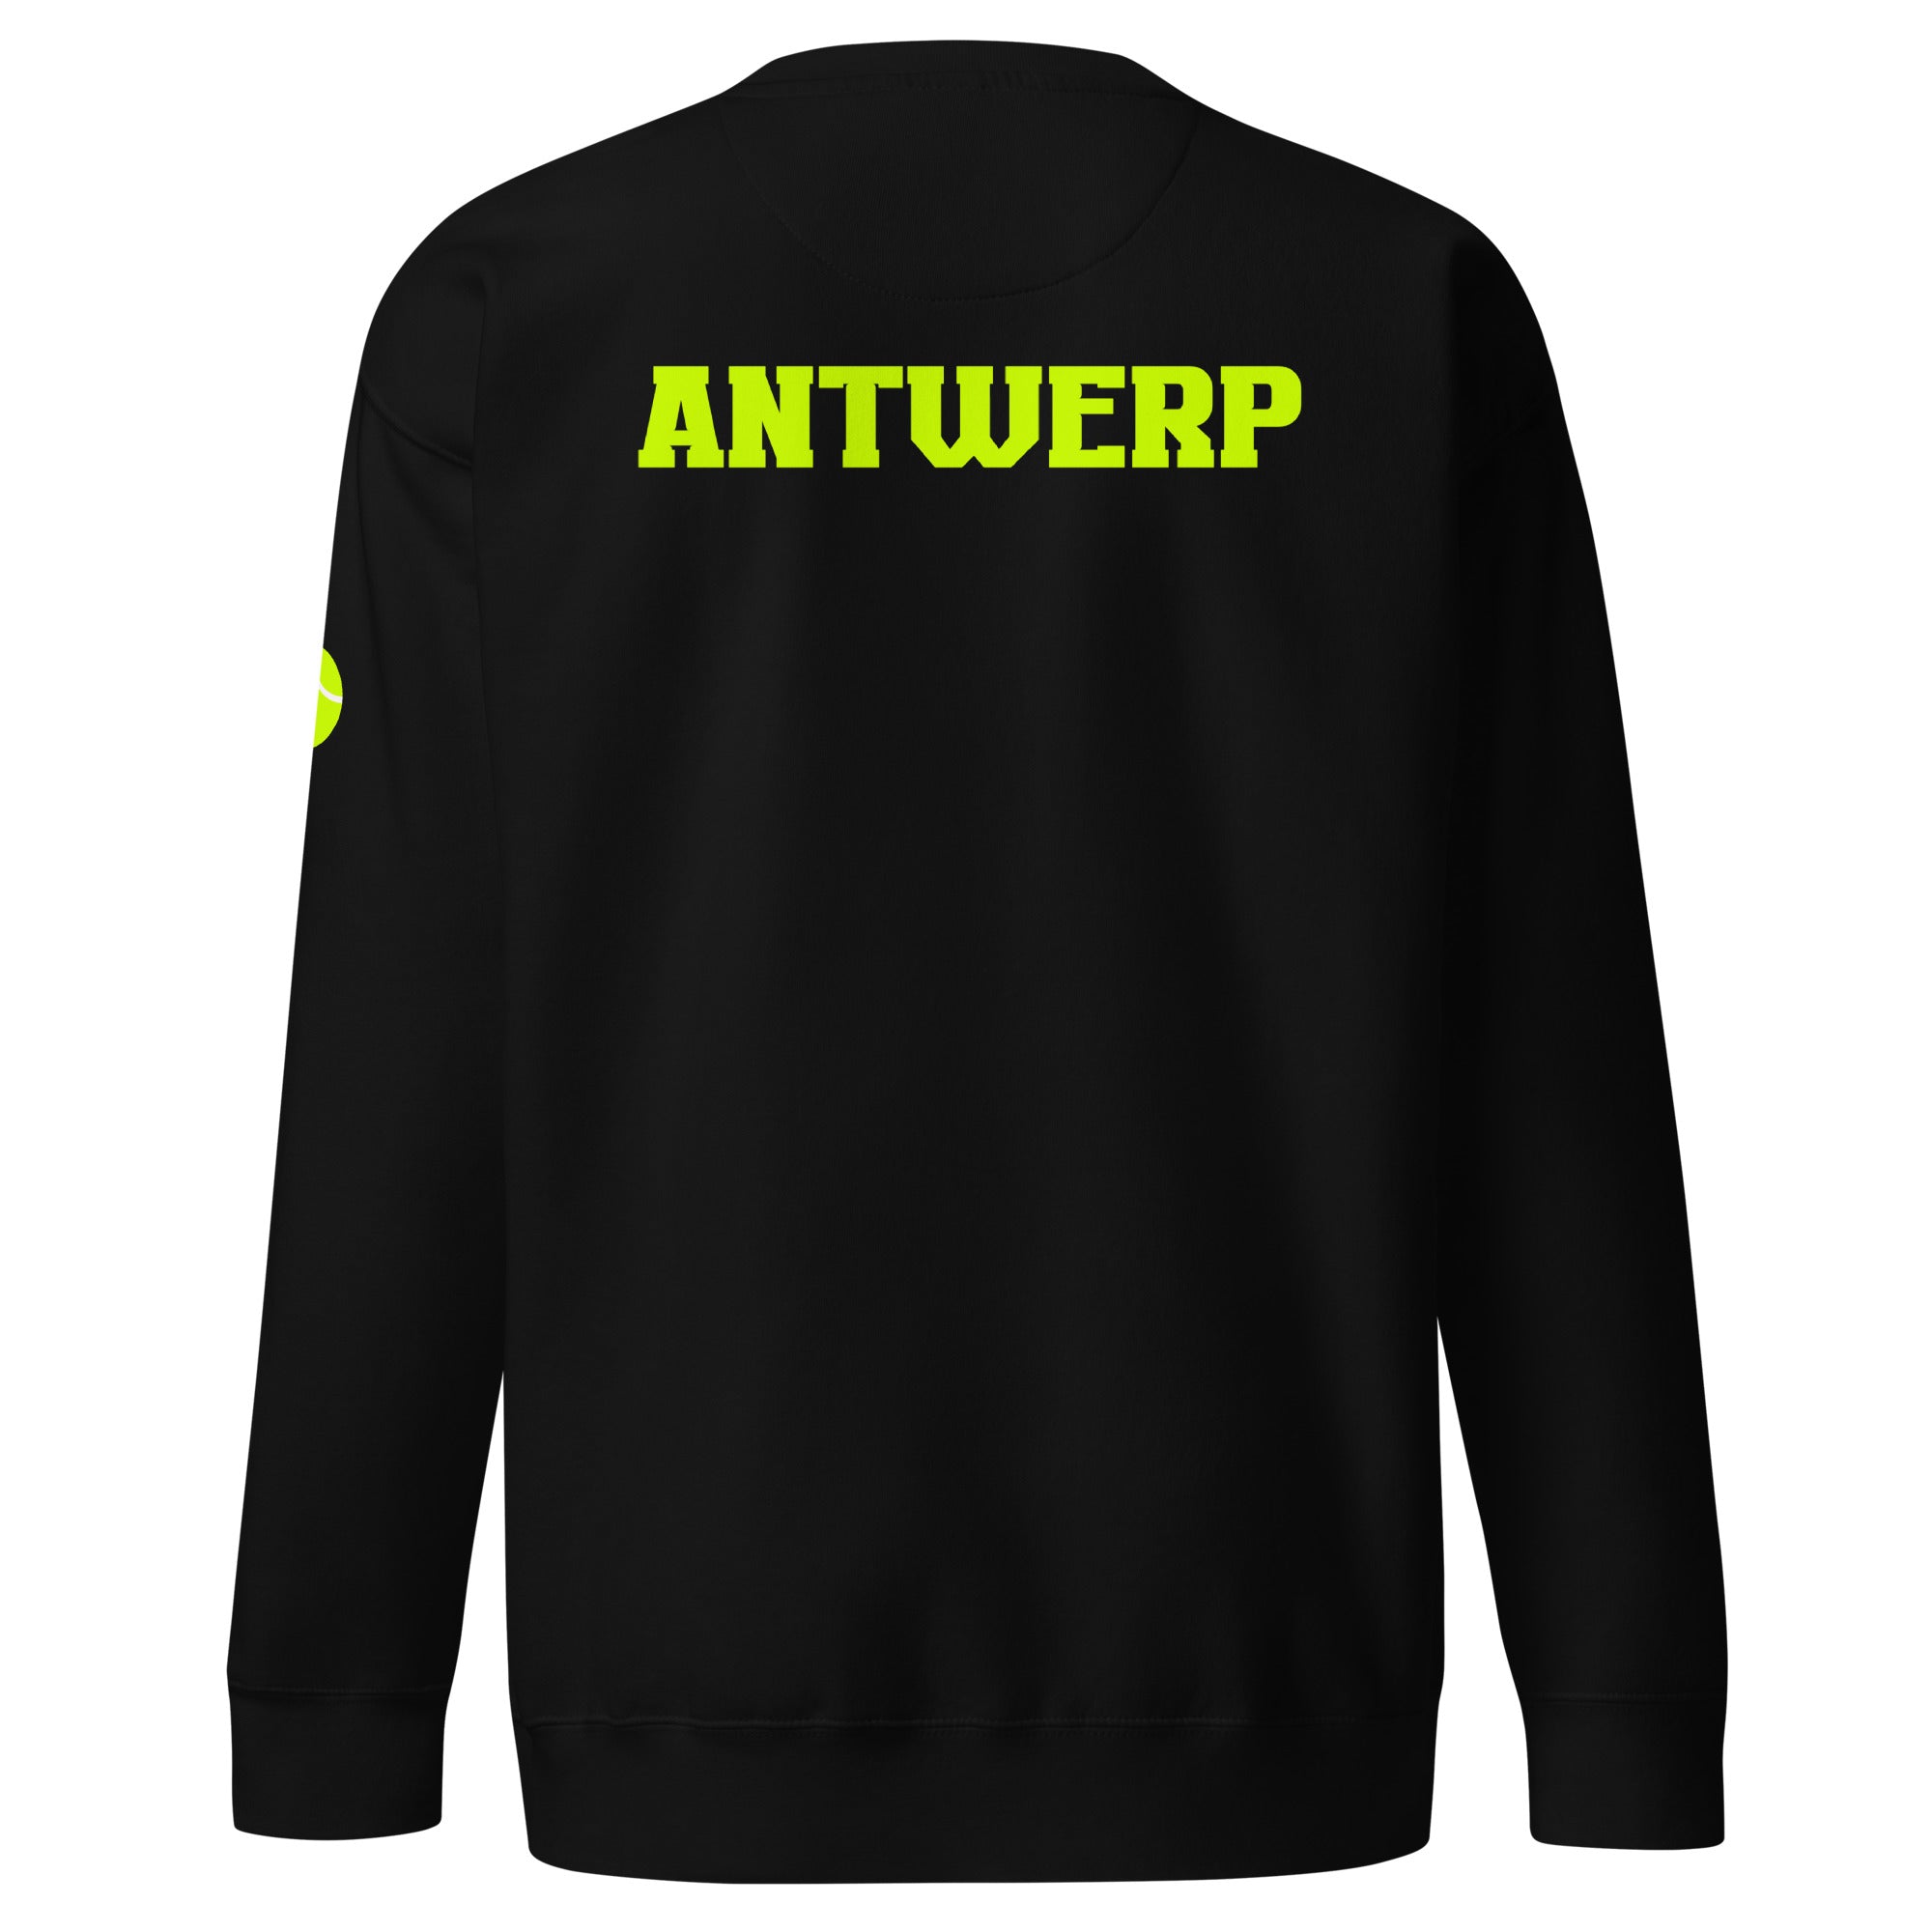 Unisex Premium Sweatshirt - Tennis Masters Antwerp - GRAPHIC T-SHIRTS